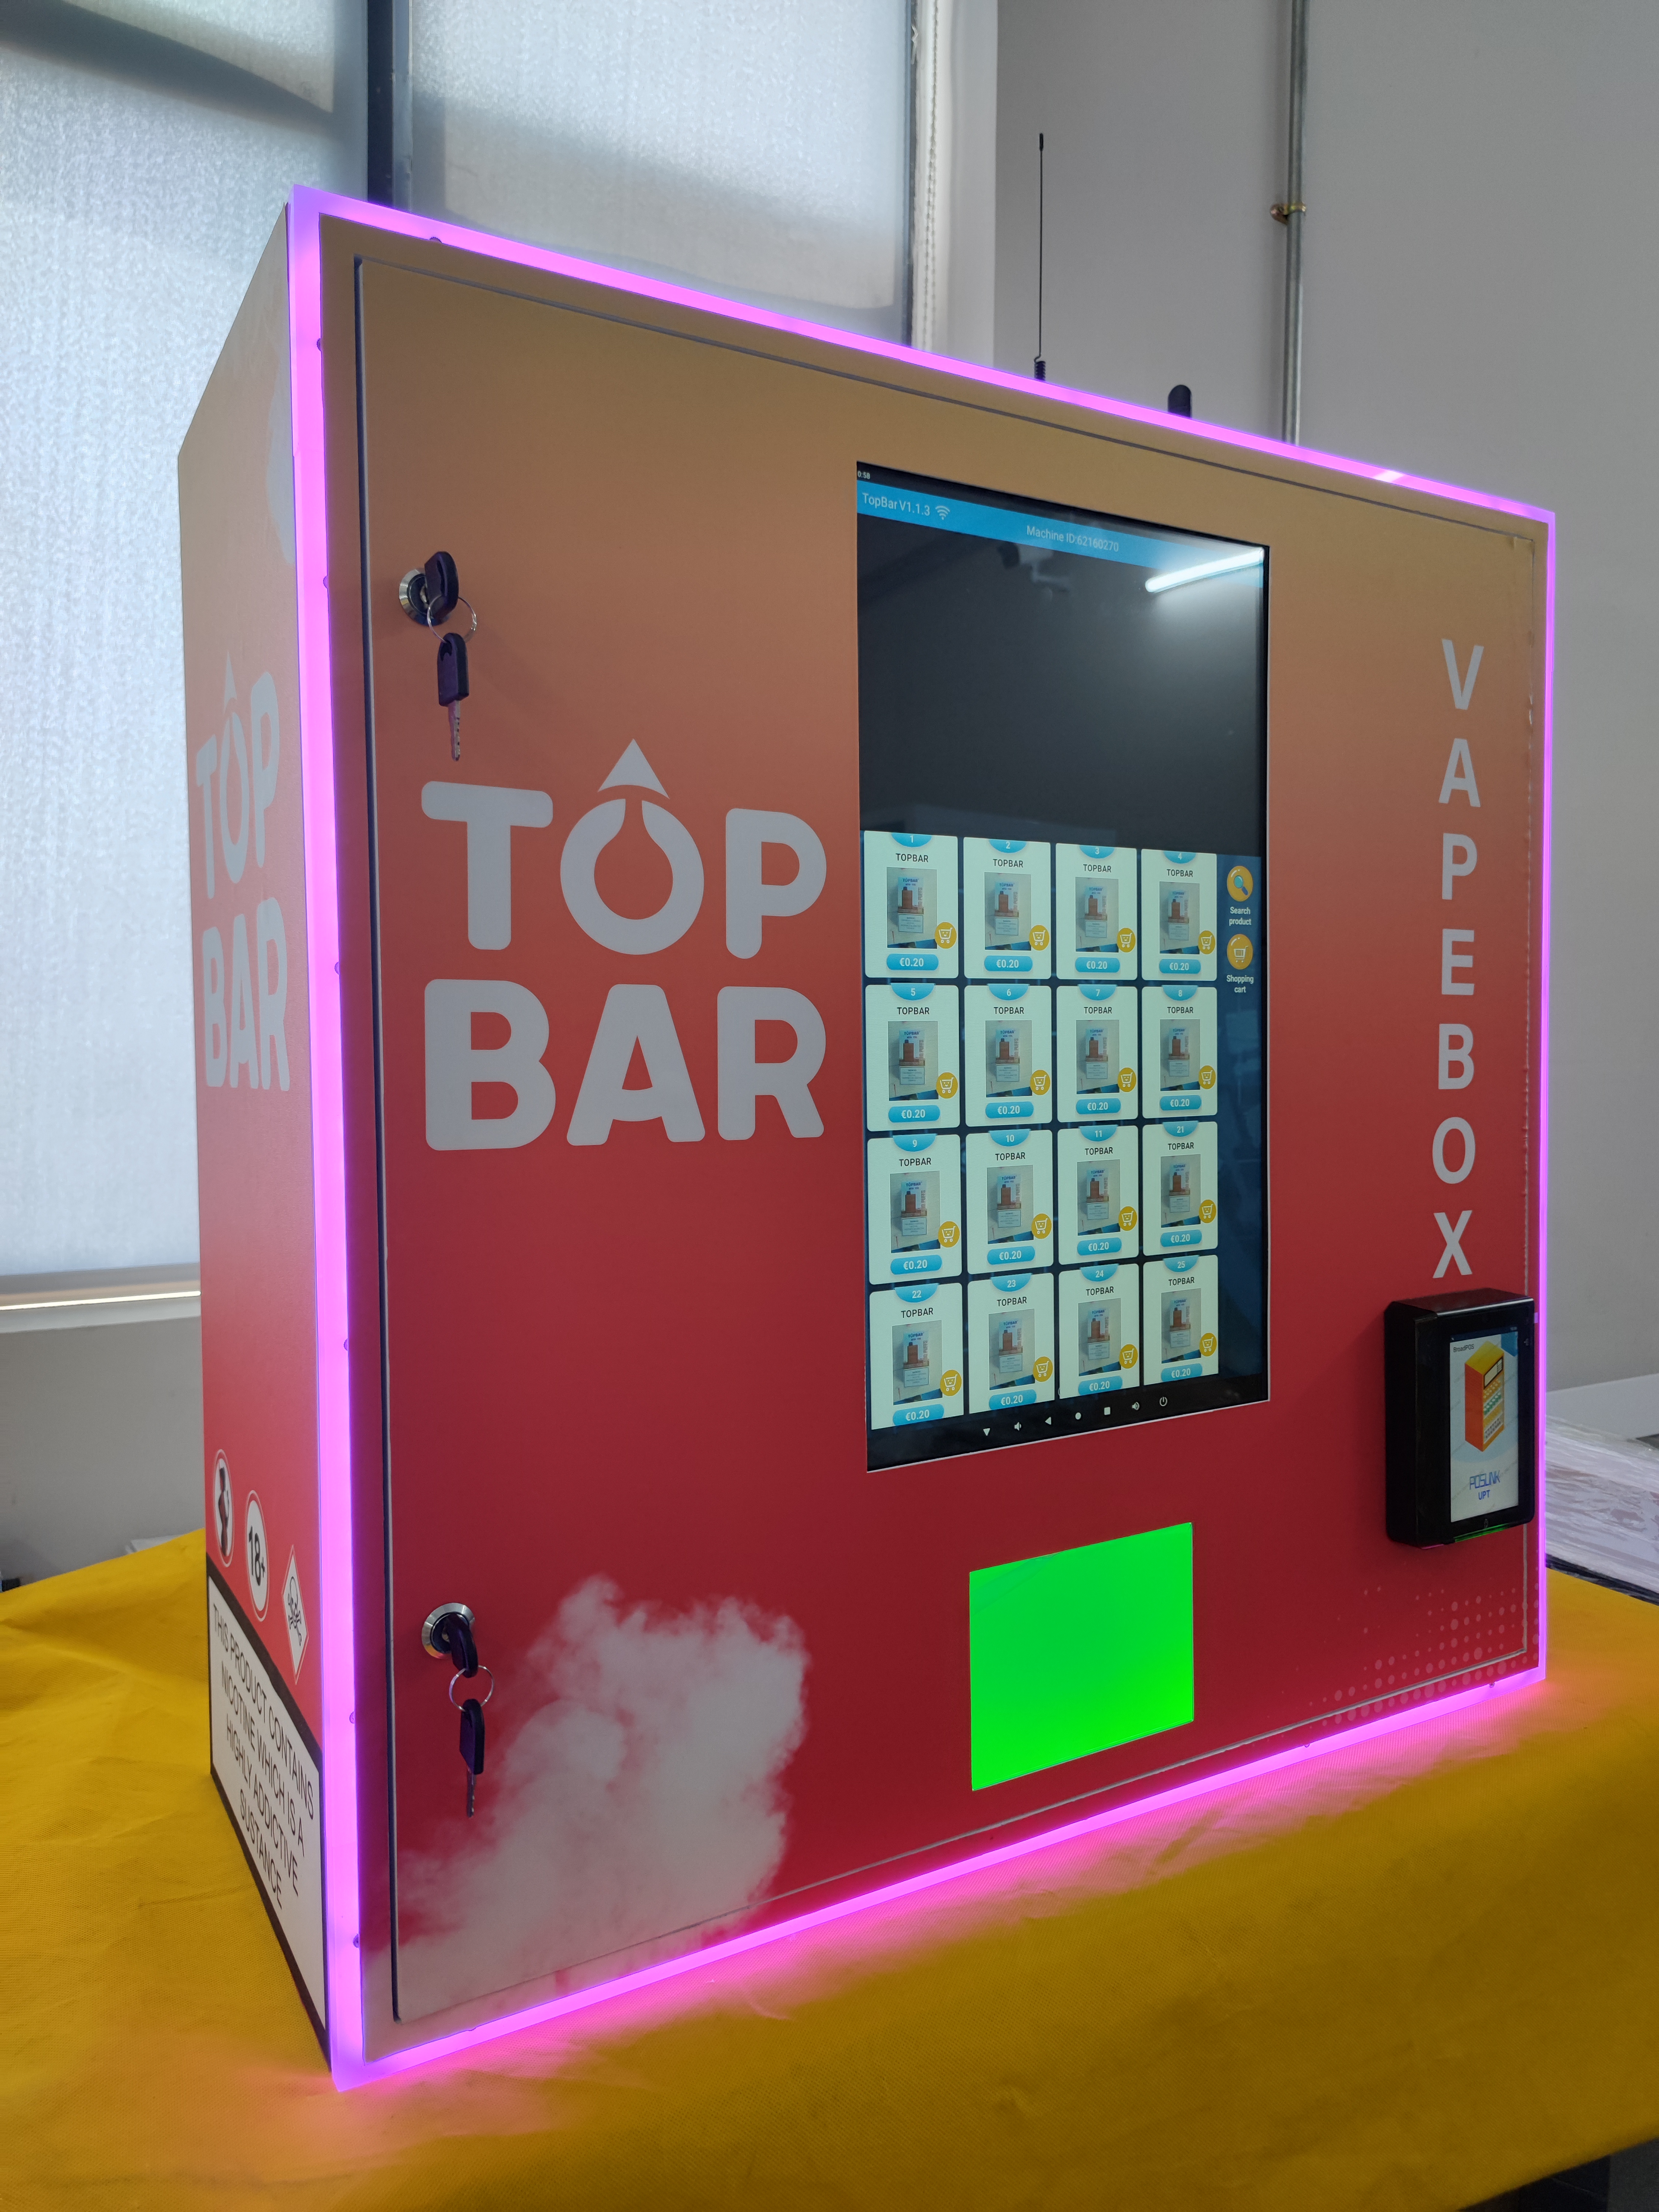 WEIMI smart vape vending machine 22 inch touchscreen